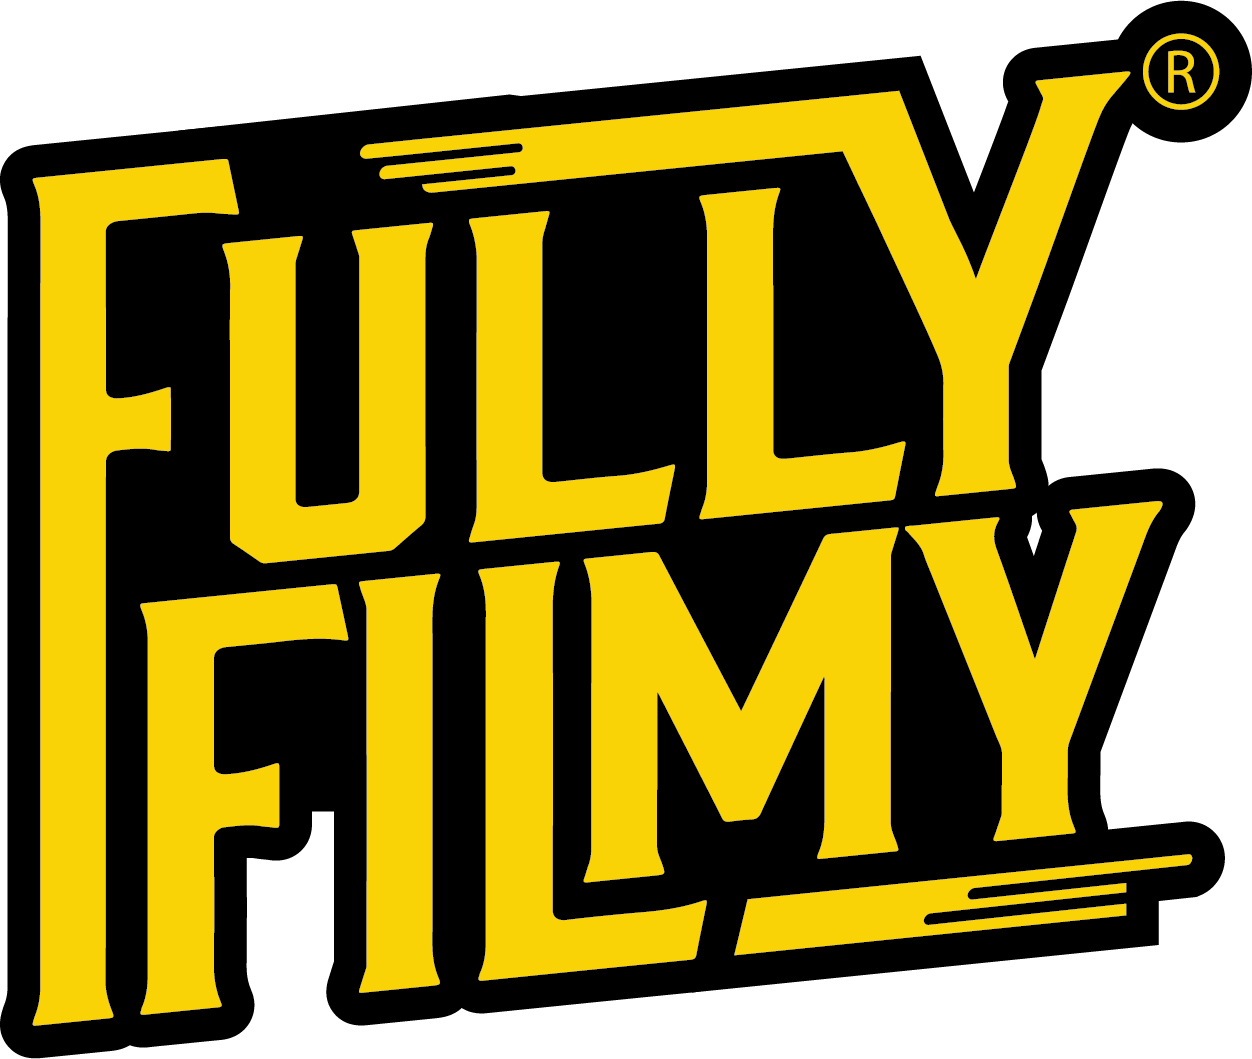 Fully Filmy